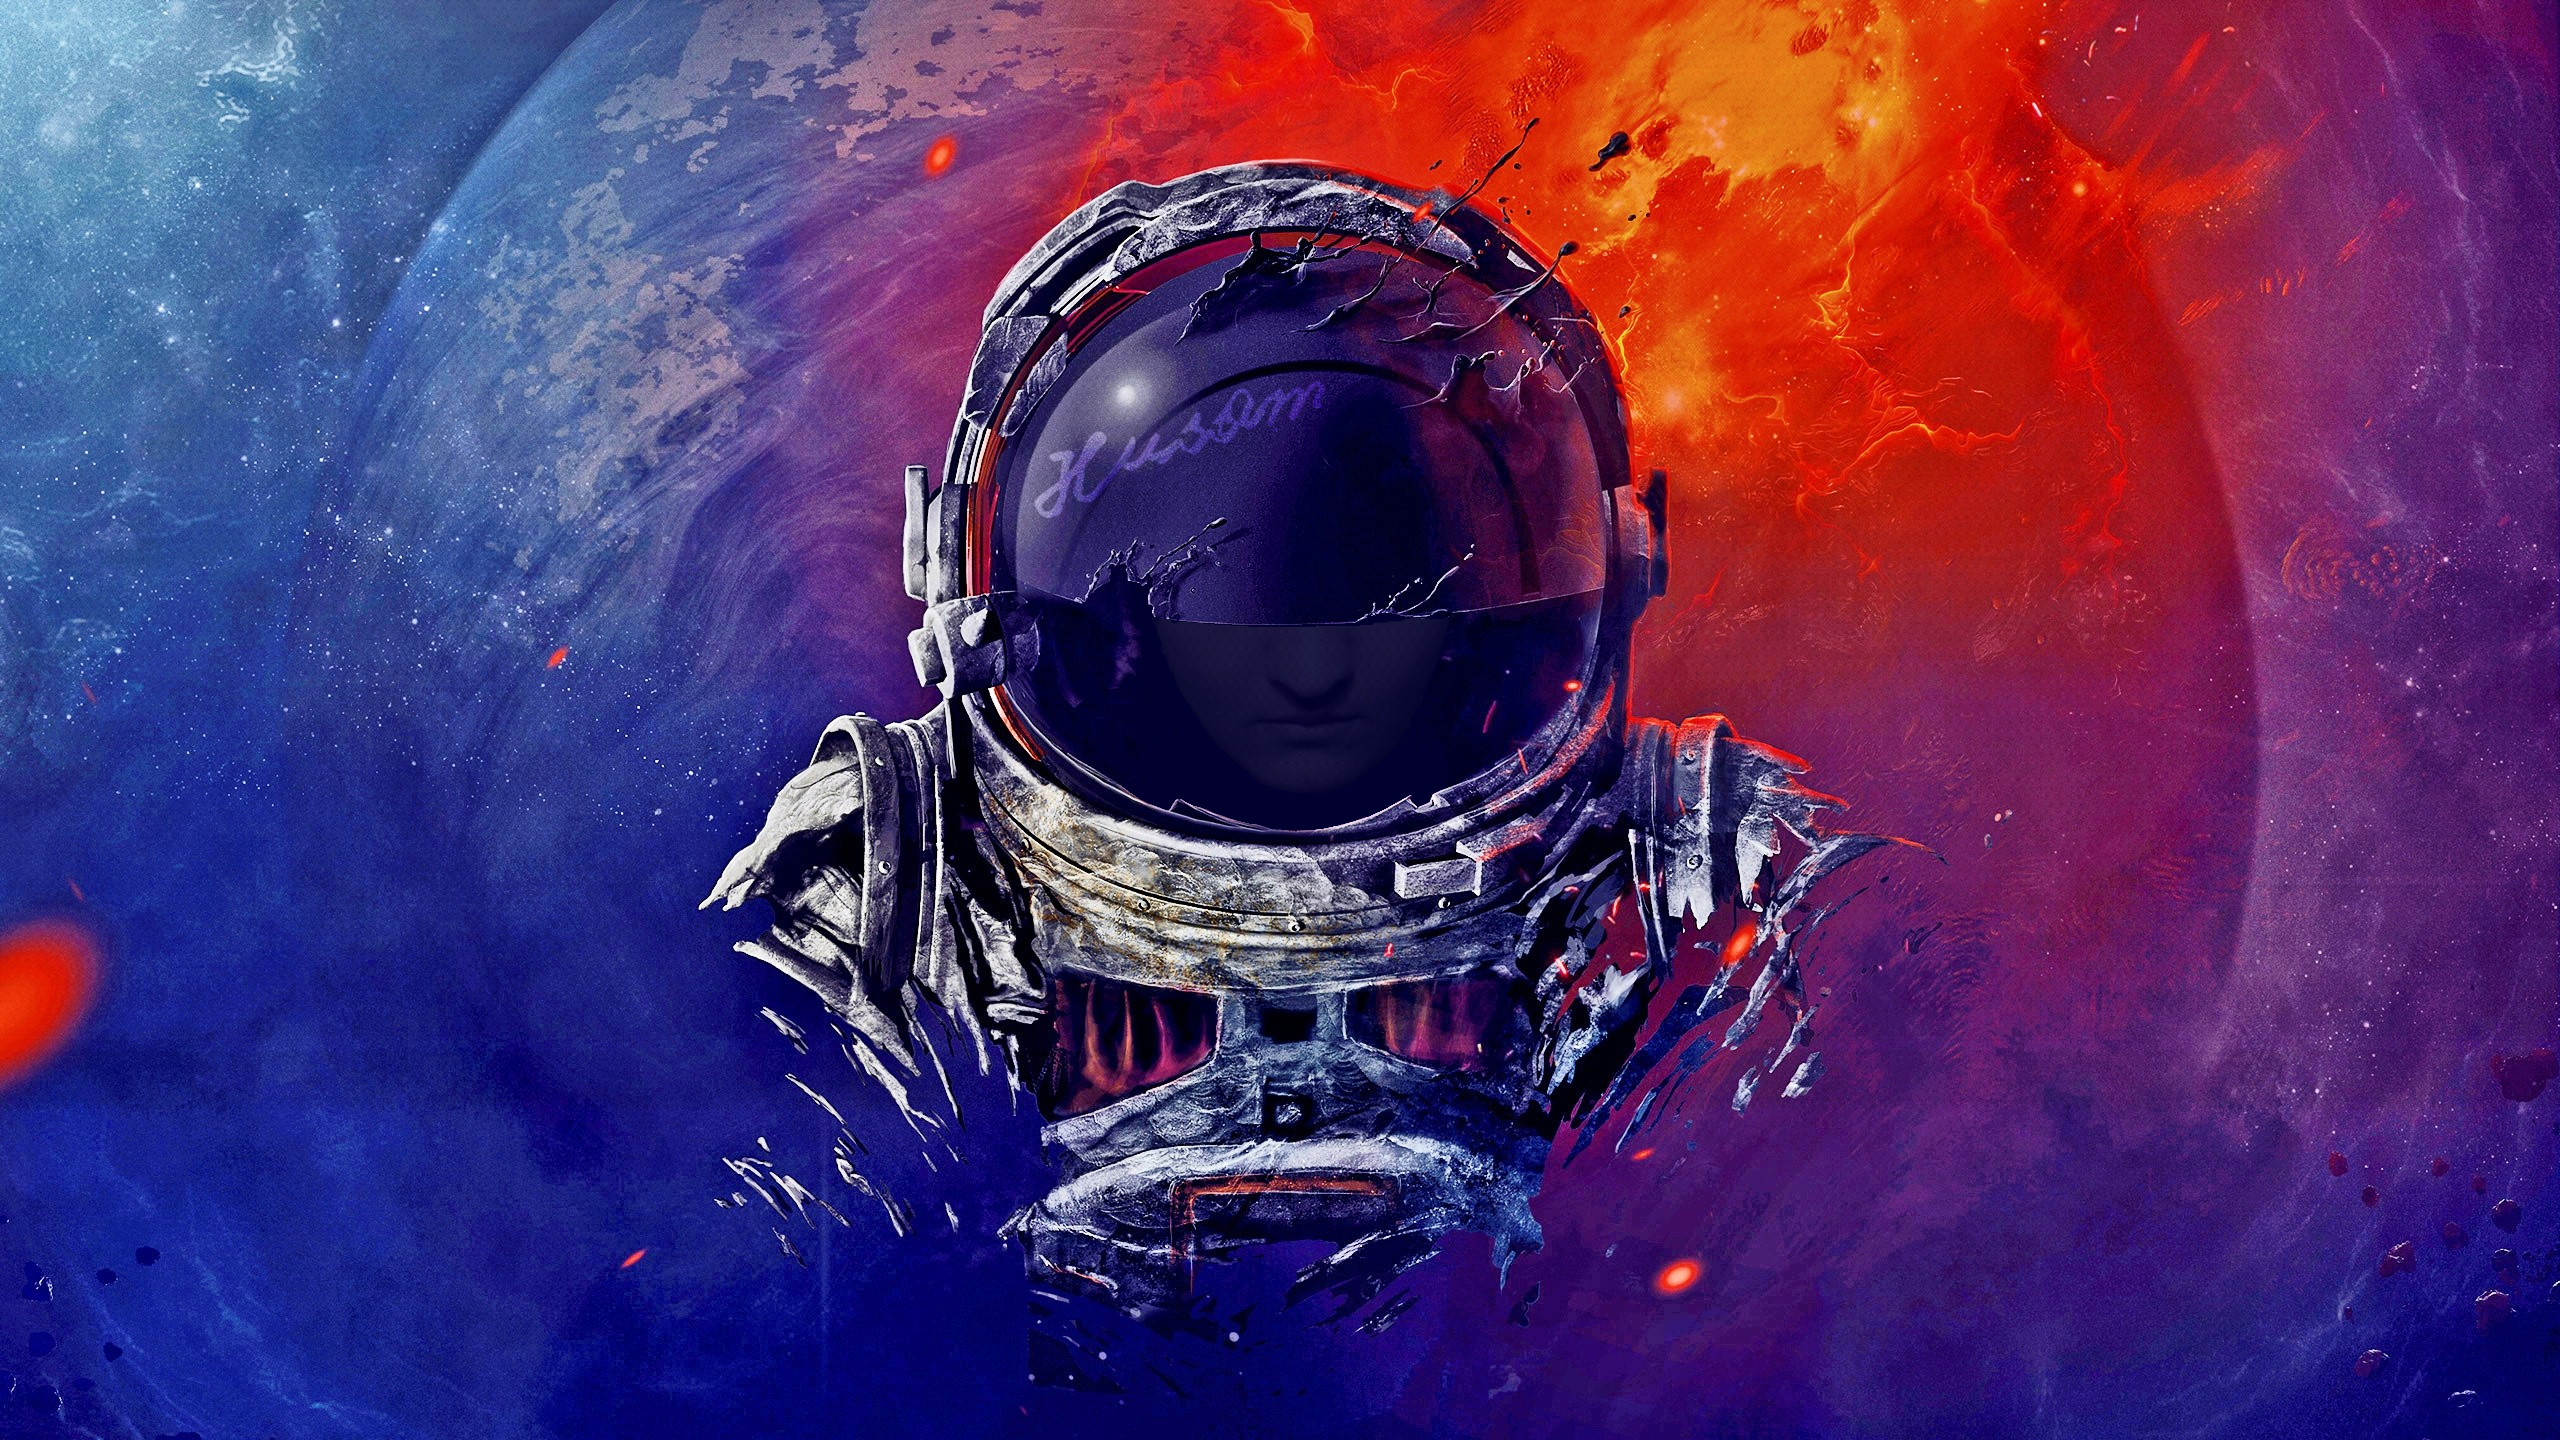 General 2560x1440 science fiction astronaut digital art space art